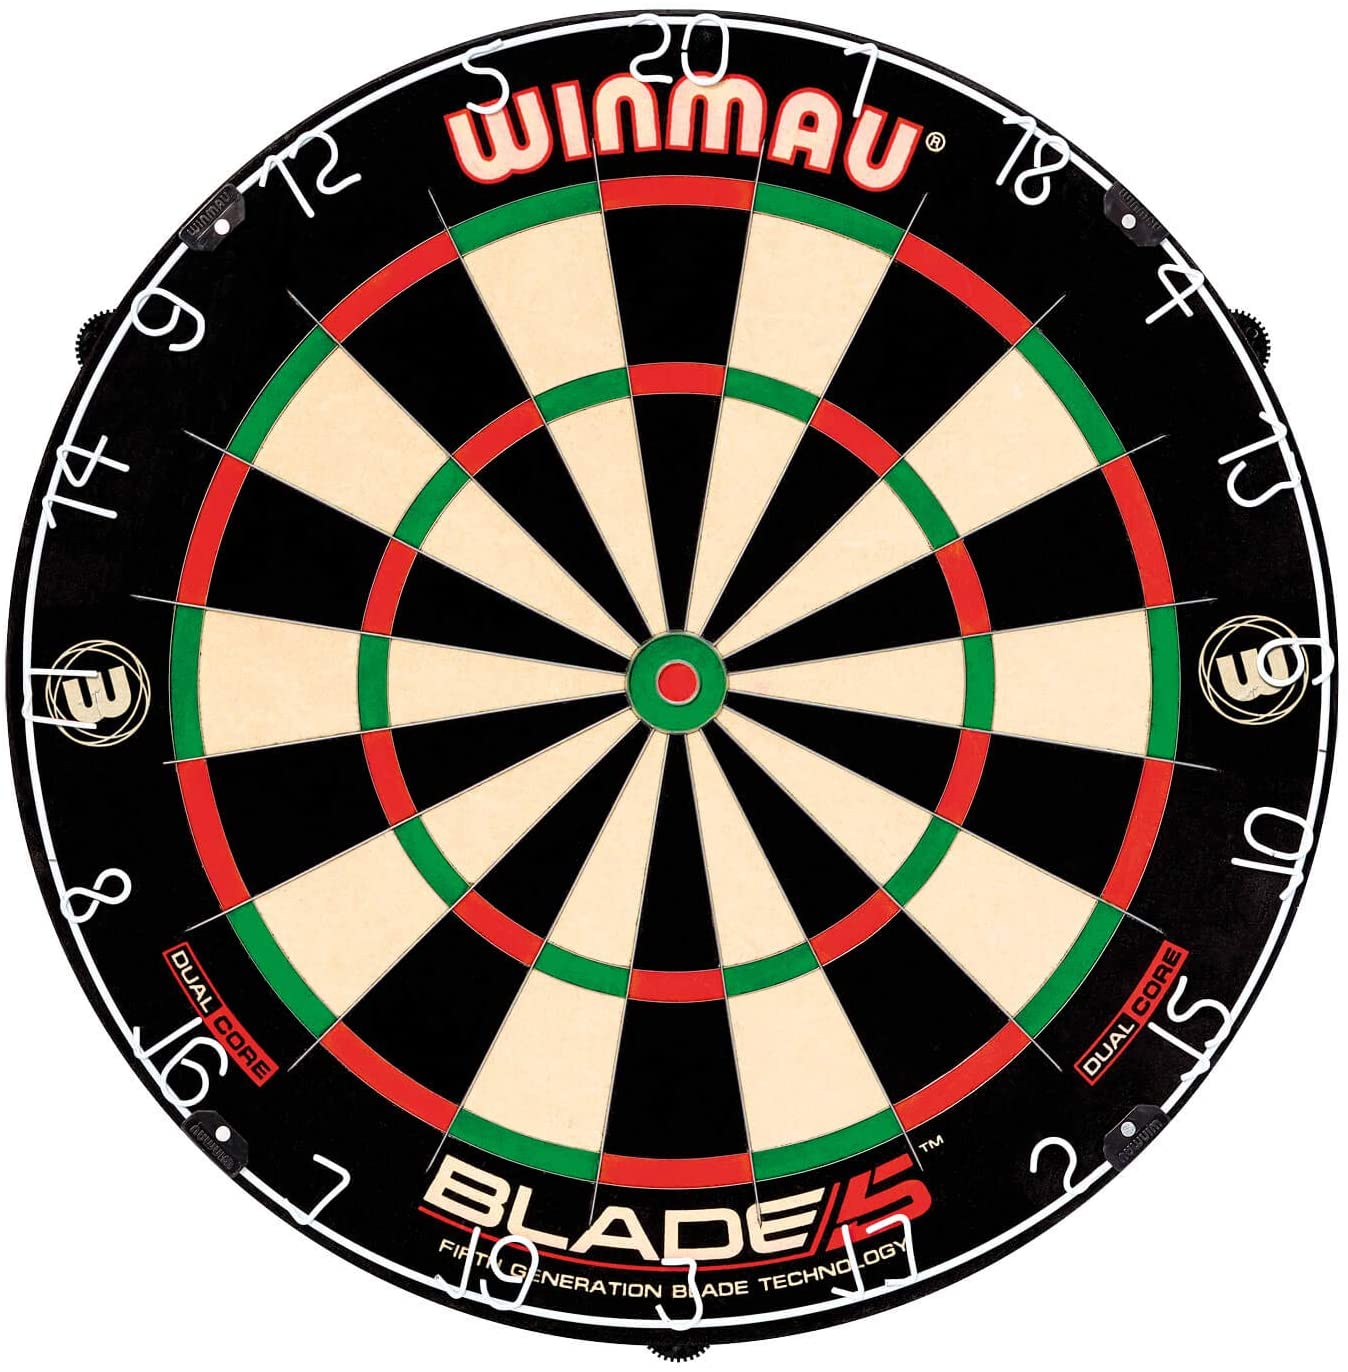 Winmau Blade 5 Dual Core Bristle Dartboard The Ultimate Home Dartboard Setup (Step-by-Step Guide) dartboard, darts, guide, info